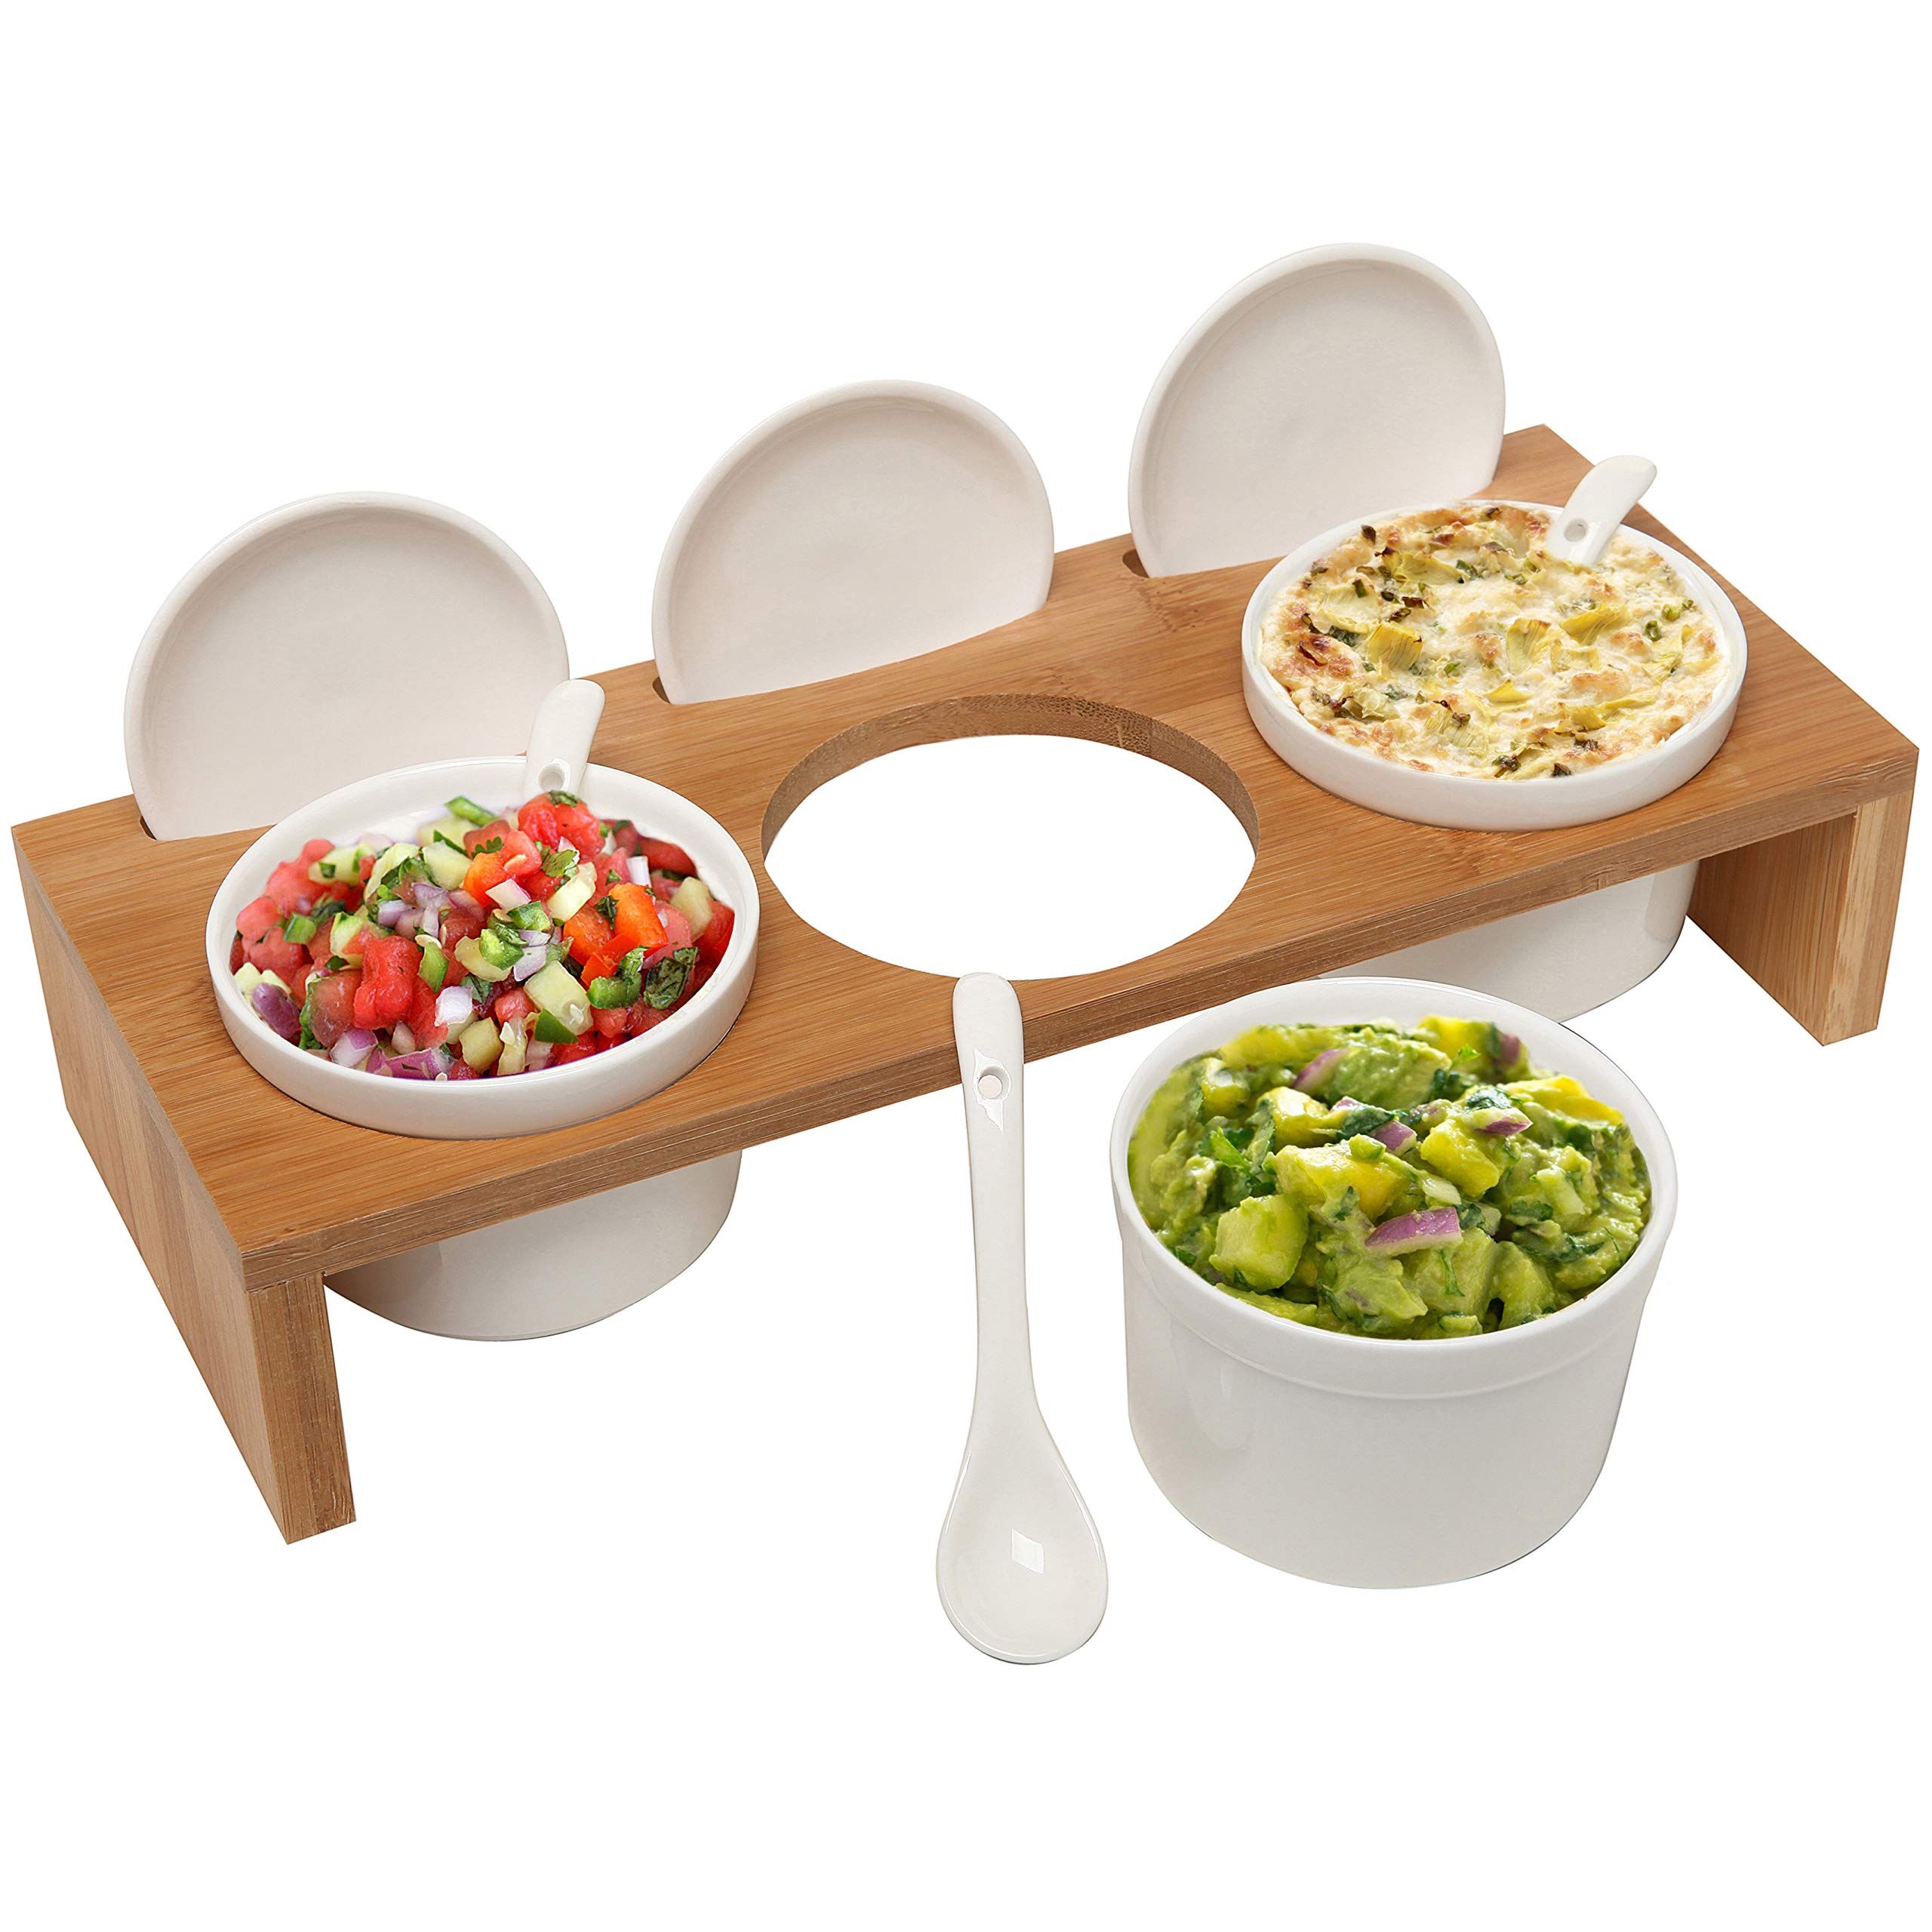 MyGift Wooden Condiment Set, Ceramic Dip Bowls, Sauce Ramekins 3 Piece Set with Lids and Spoons o... | Amazon (US)